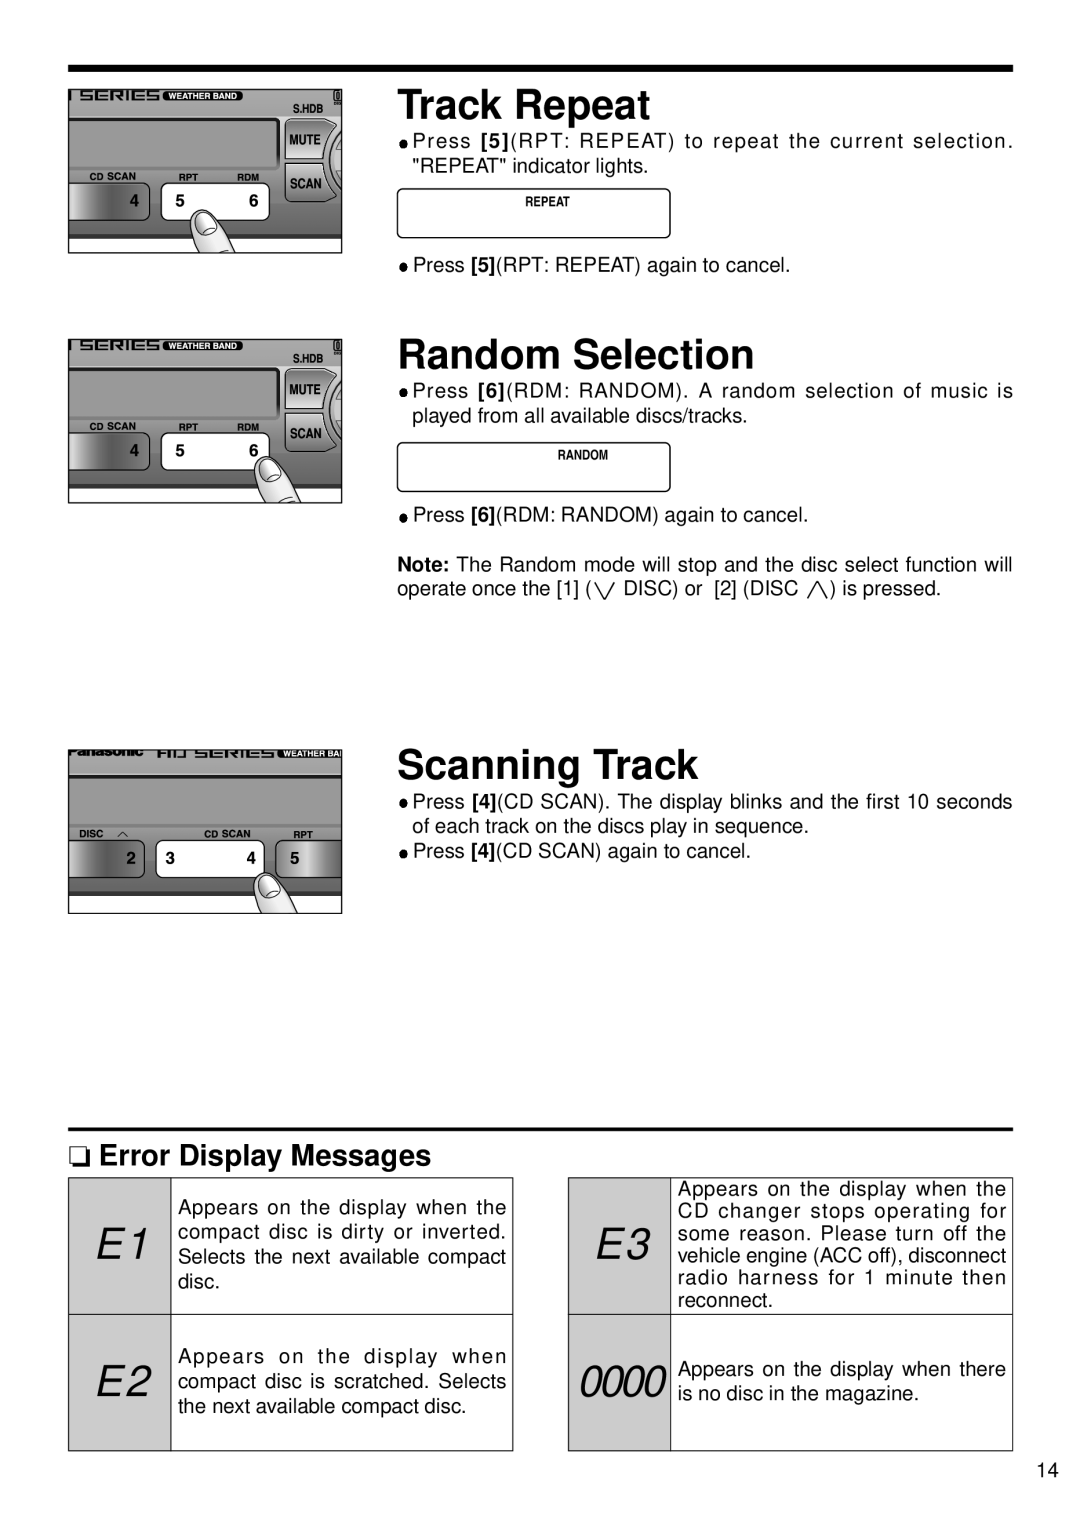 Panasonic 5300U, CQ-5500U manual Track Repeat, Error Display Messages, Random Selection, Scanning Track, 0000 